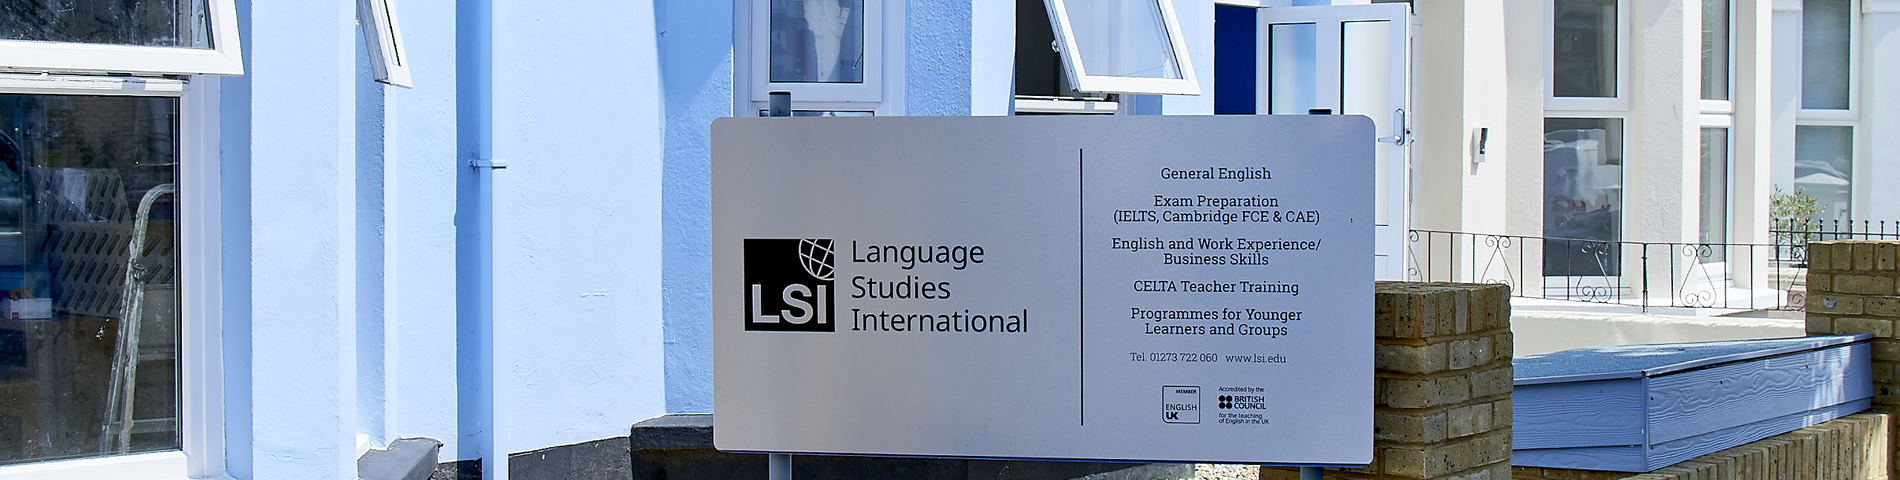 LSI - Language Studies International bild 1